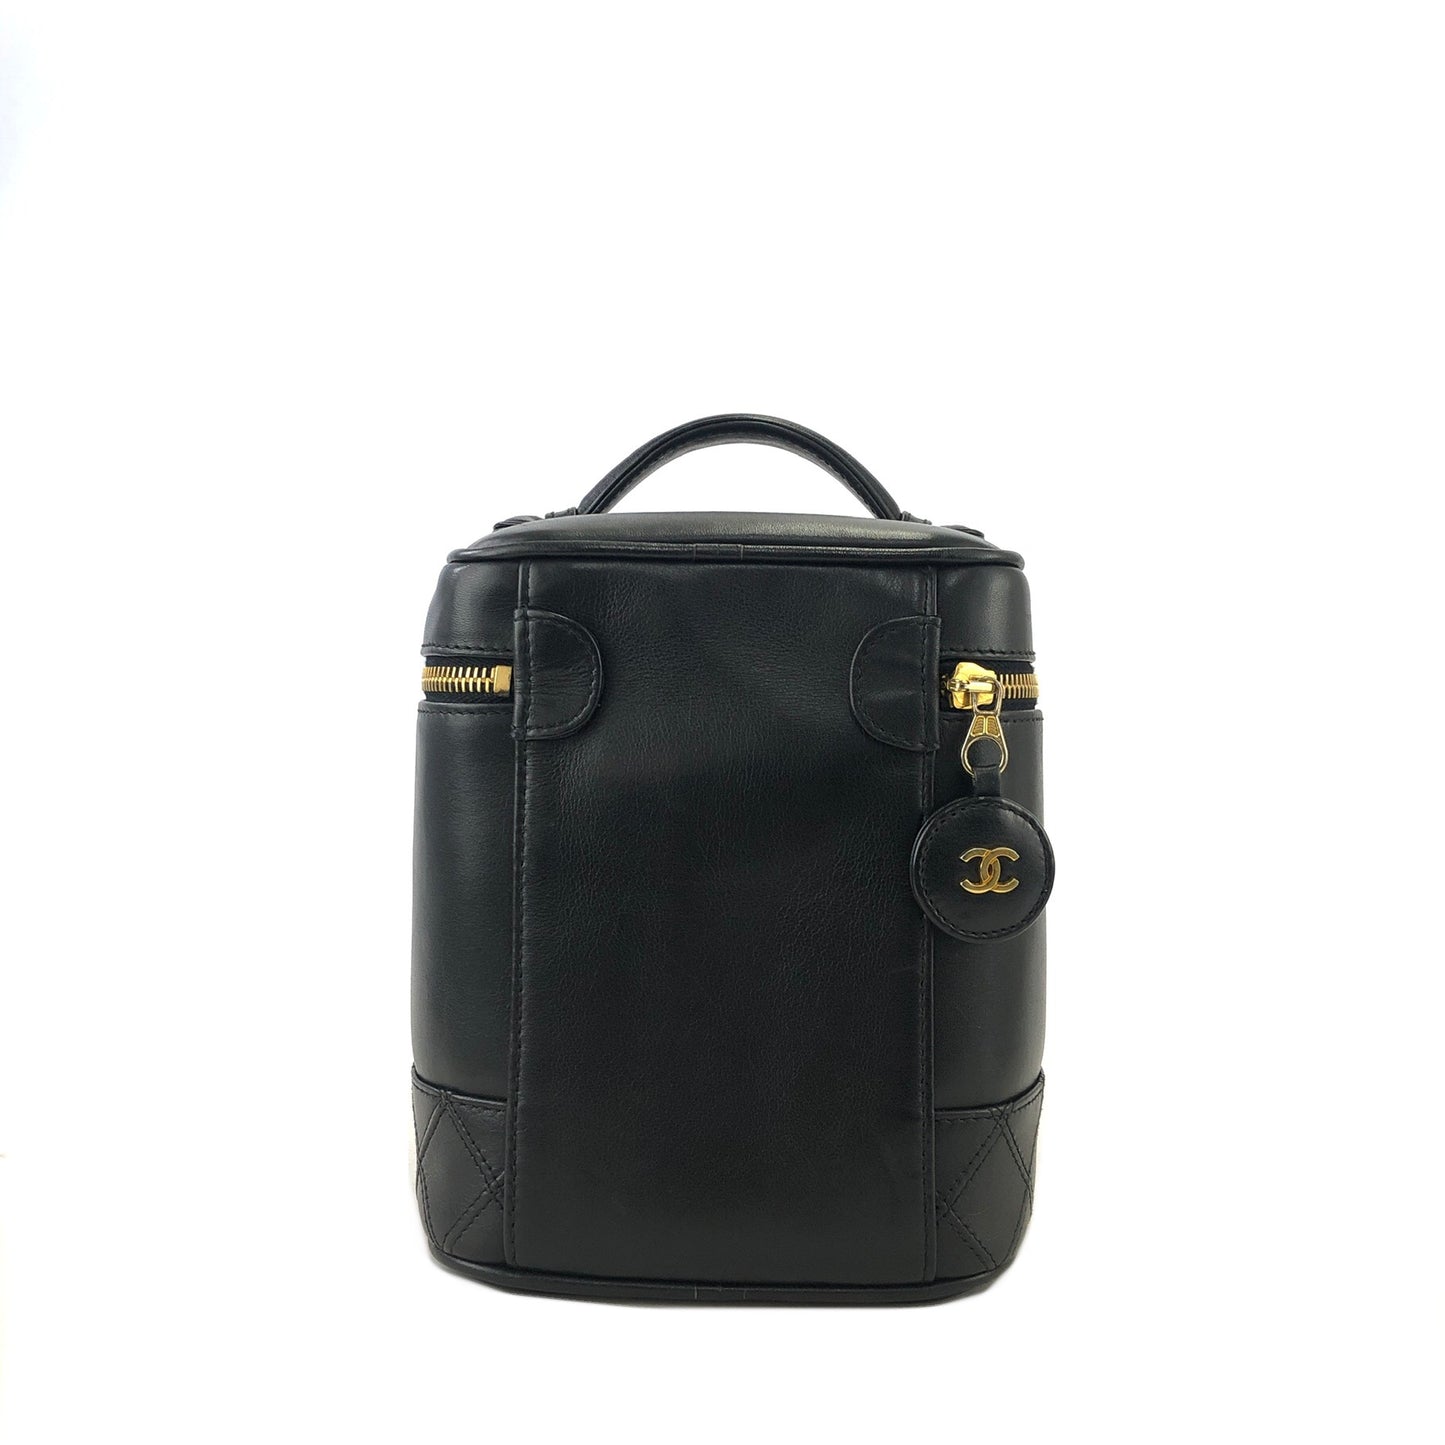 CHANEL Bicolore Lambskin Small Handbag Vanity bag  Vintage v3uefp